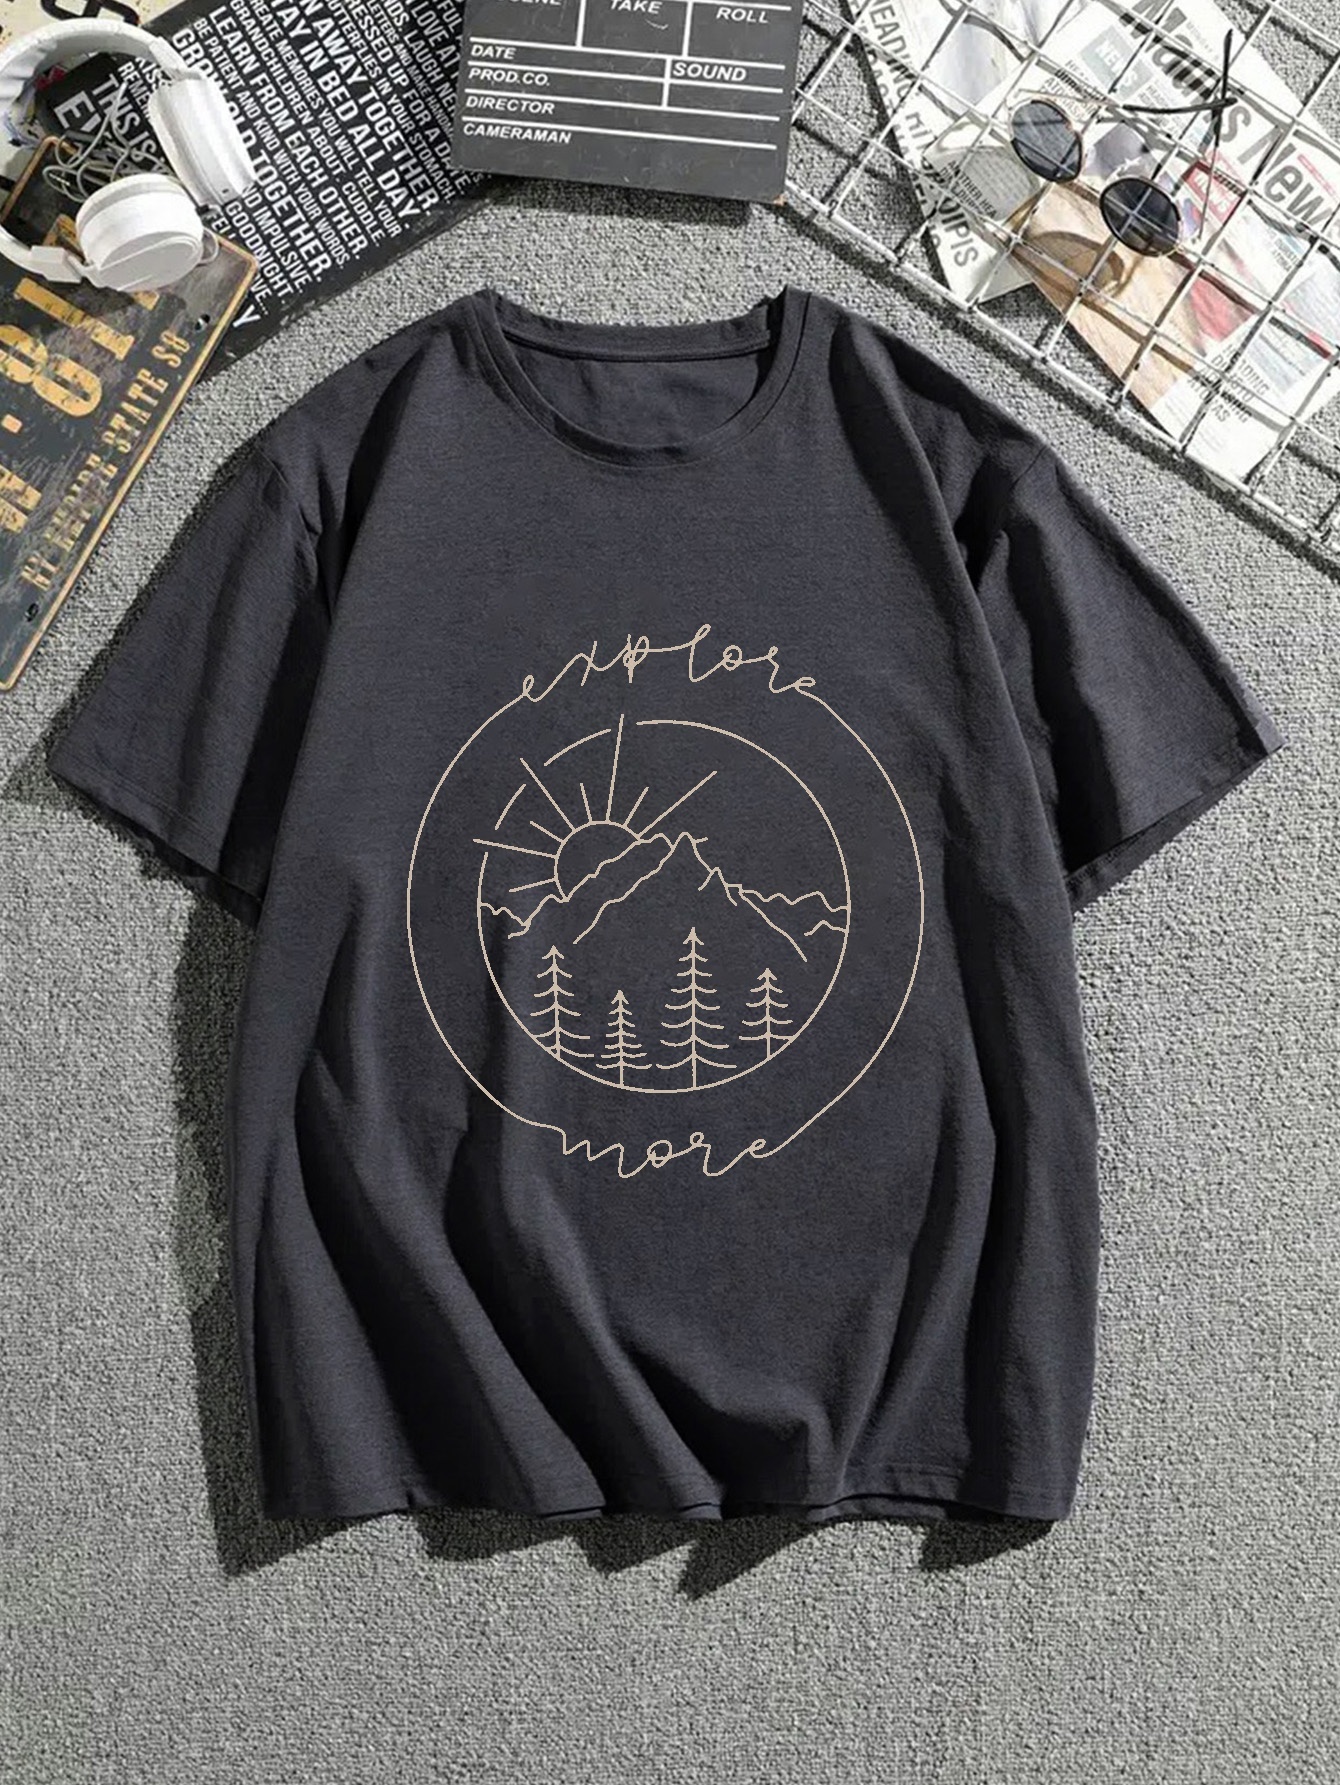 Crinkle T-shirt - T Shirt 